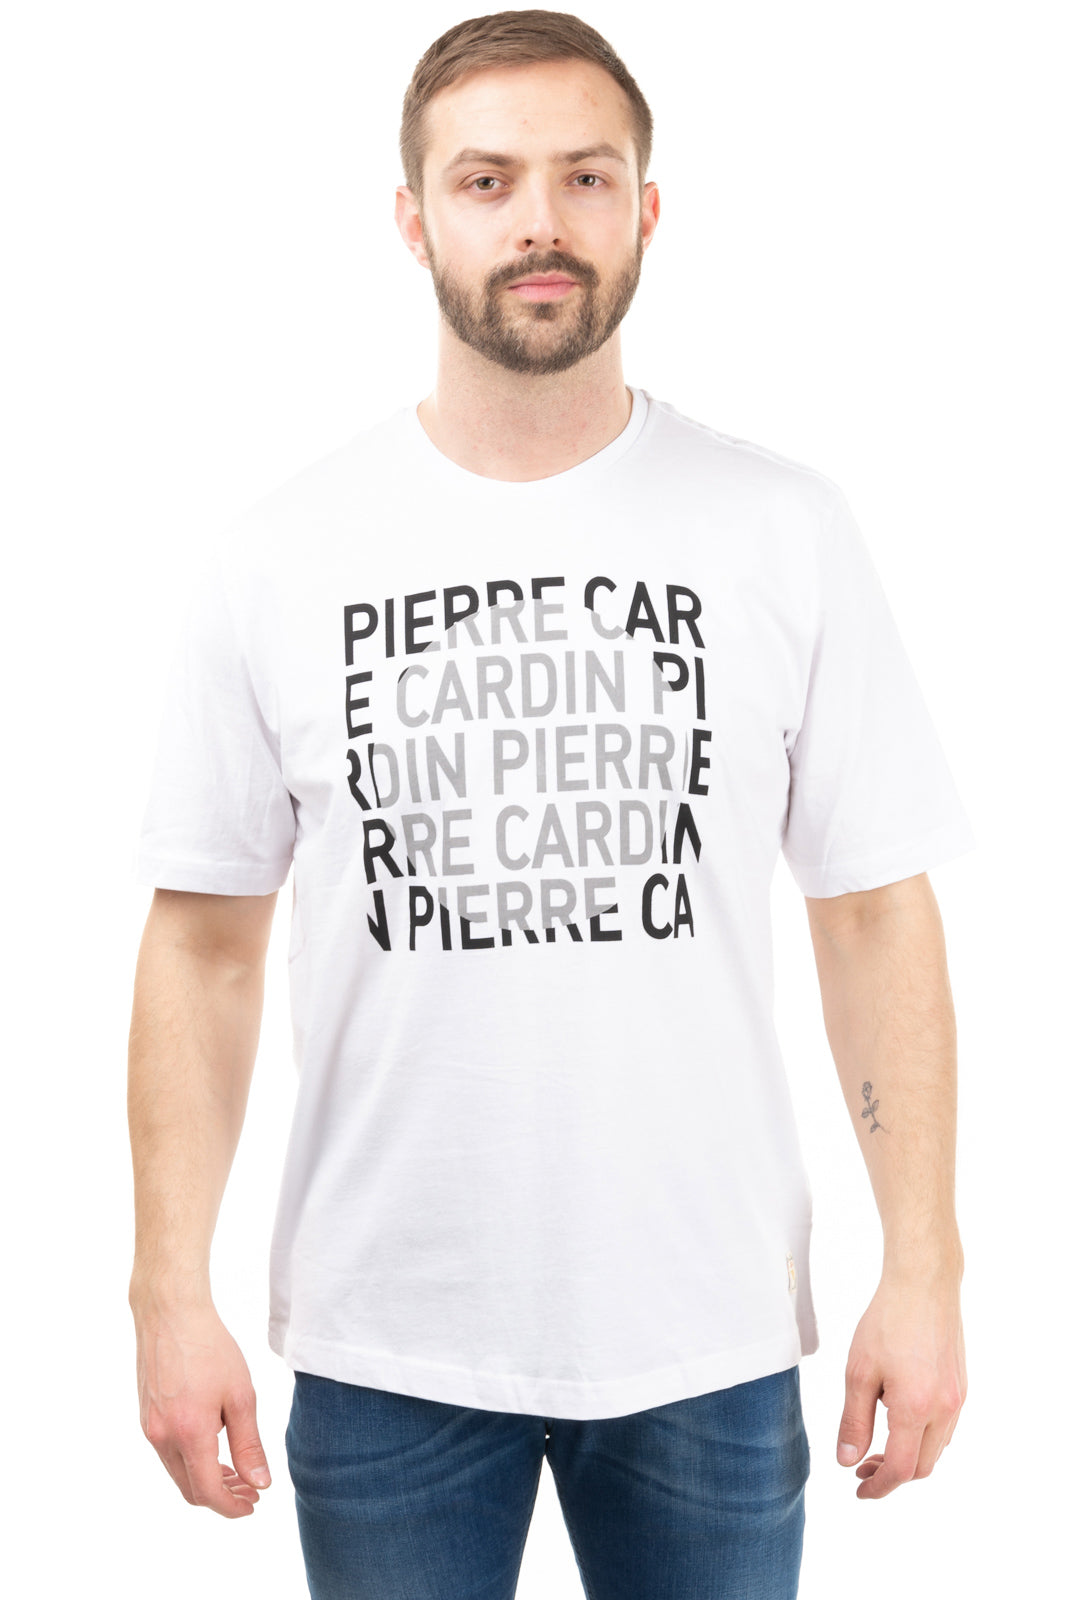 PIERRE CARDIN T-Shirt Top Size M Printed Logo Short Sleeve gallery main photo